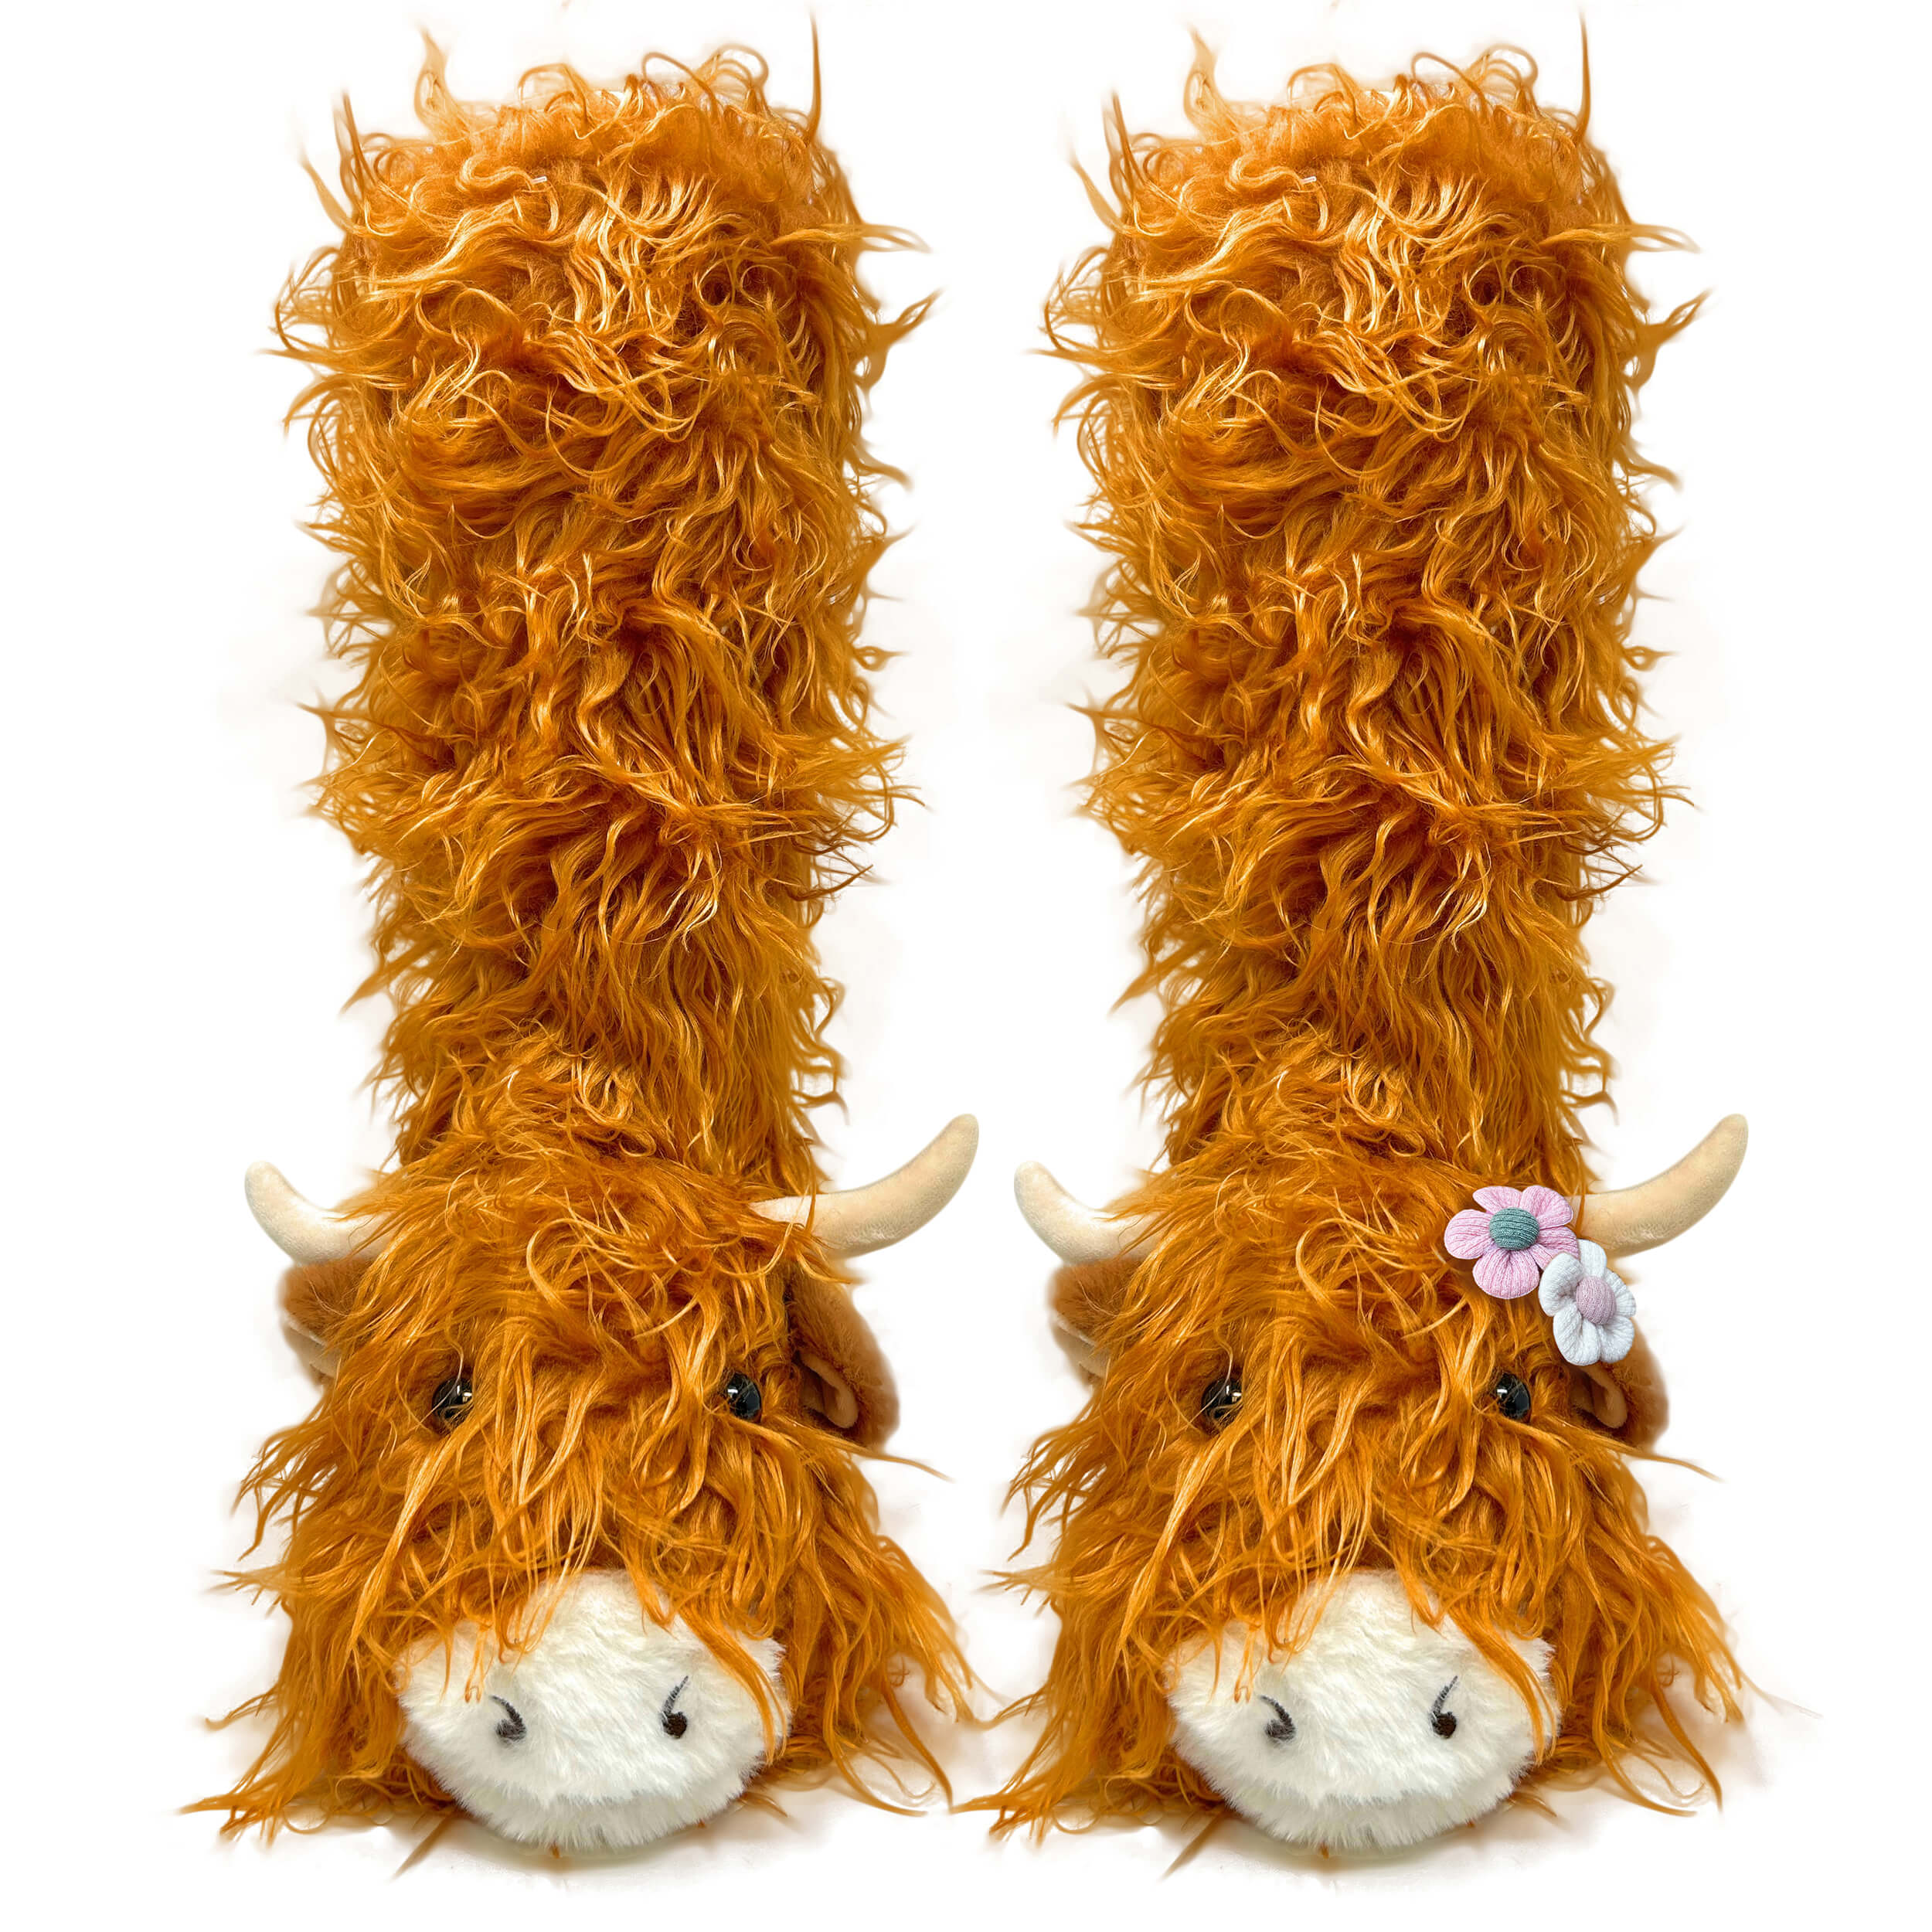 Calcetines tipo pantuflas para niños Highland Cattle